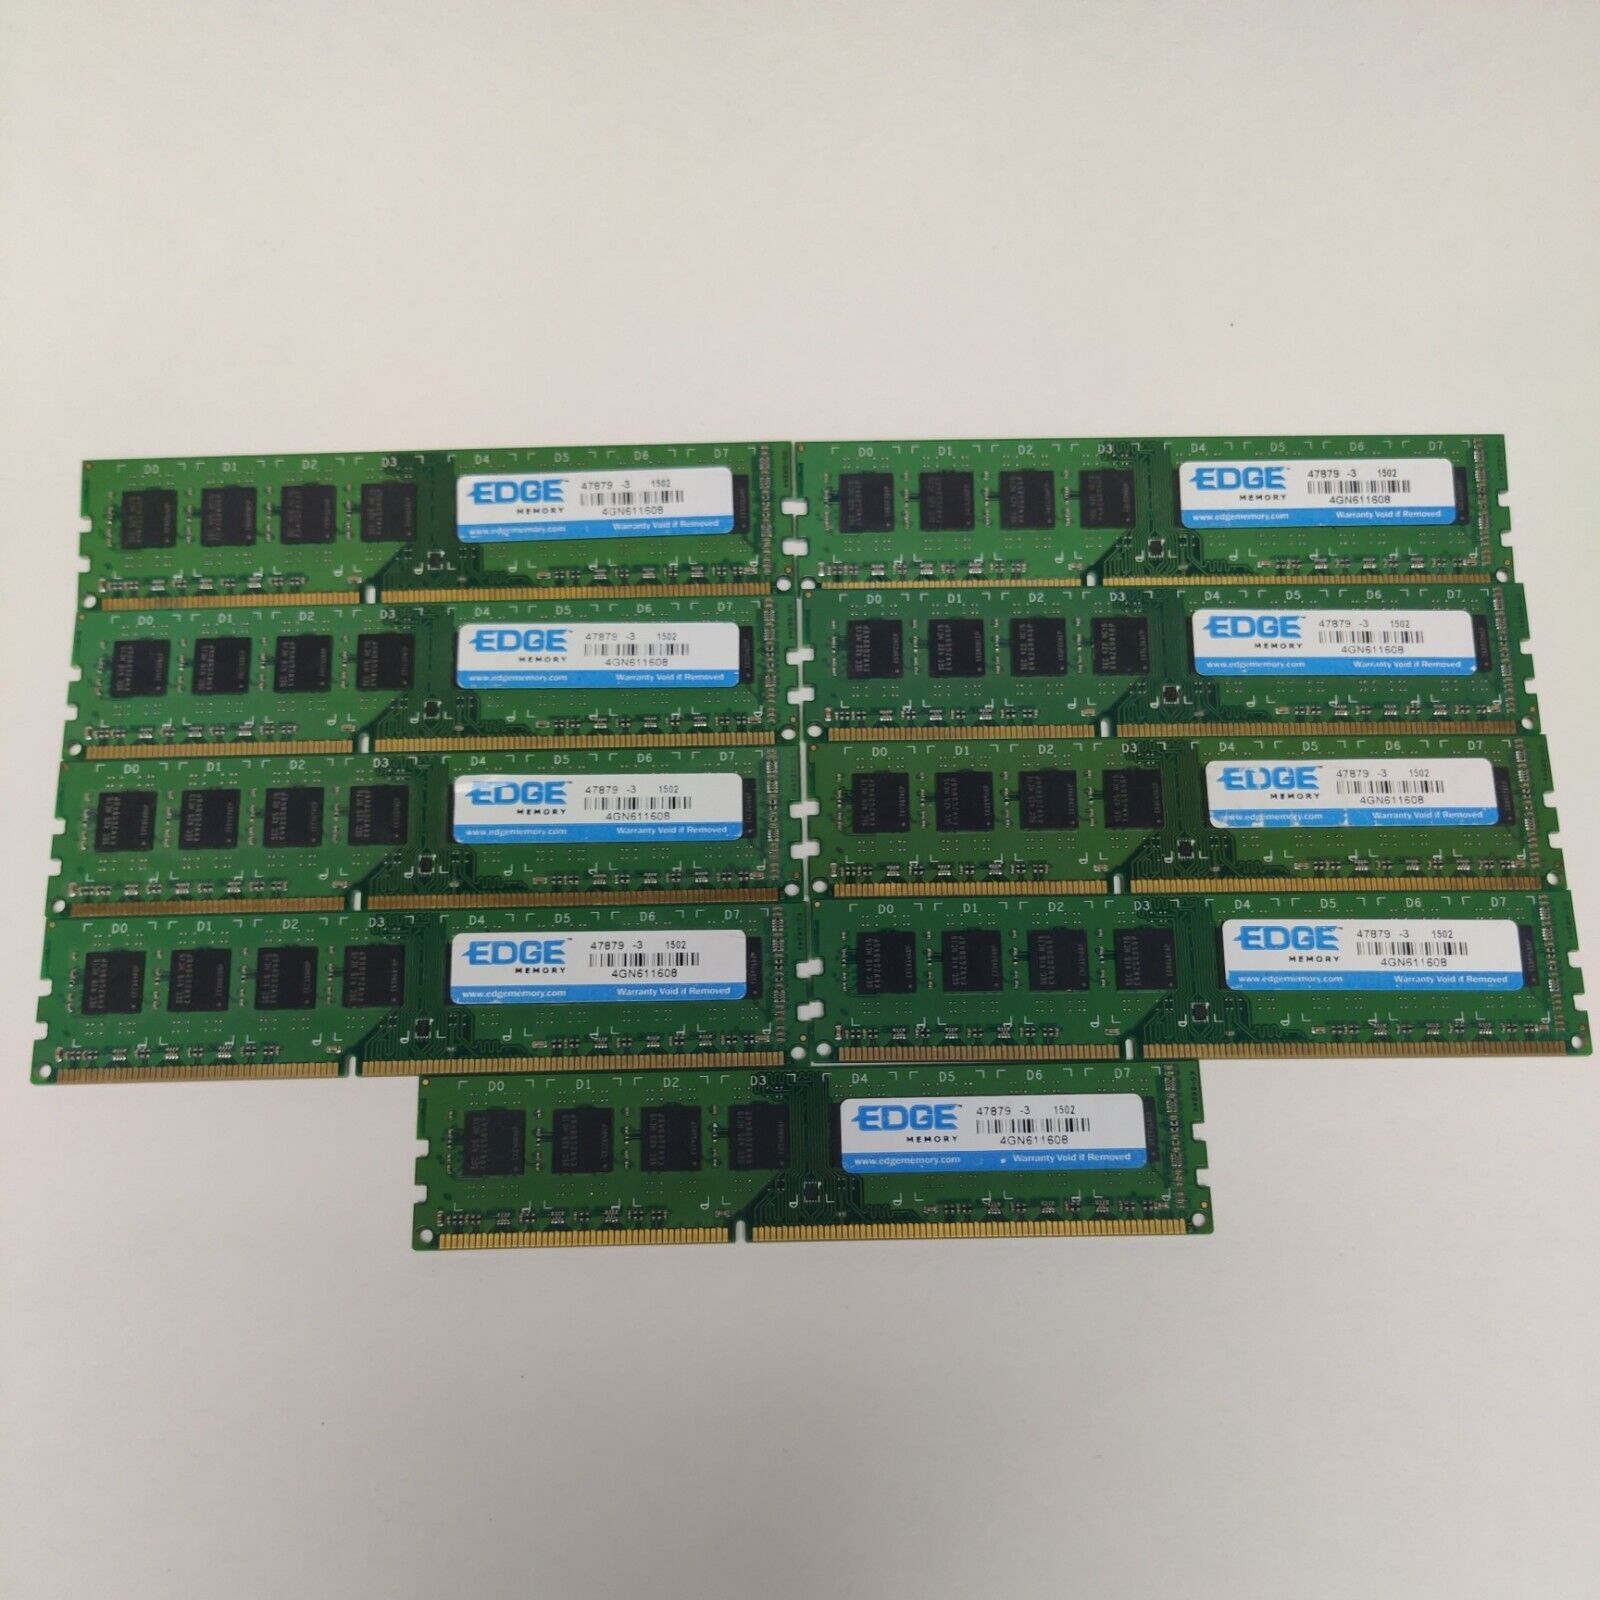 Lot of 9 sticks Edge Memory 4GB PC3-10600 DDR3 1333 DIMM Desktop SDRAM 4GN611608